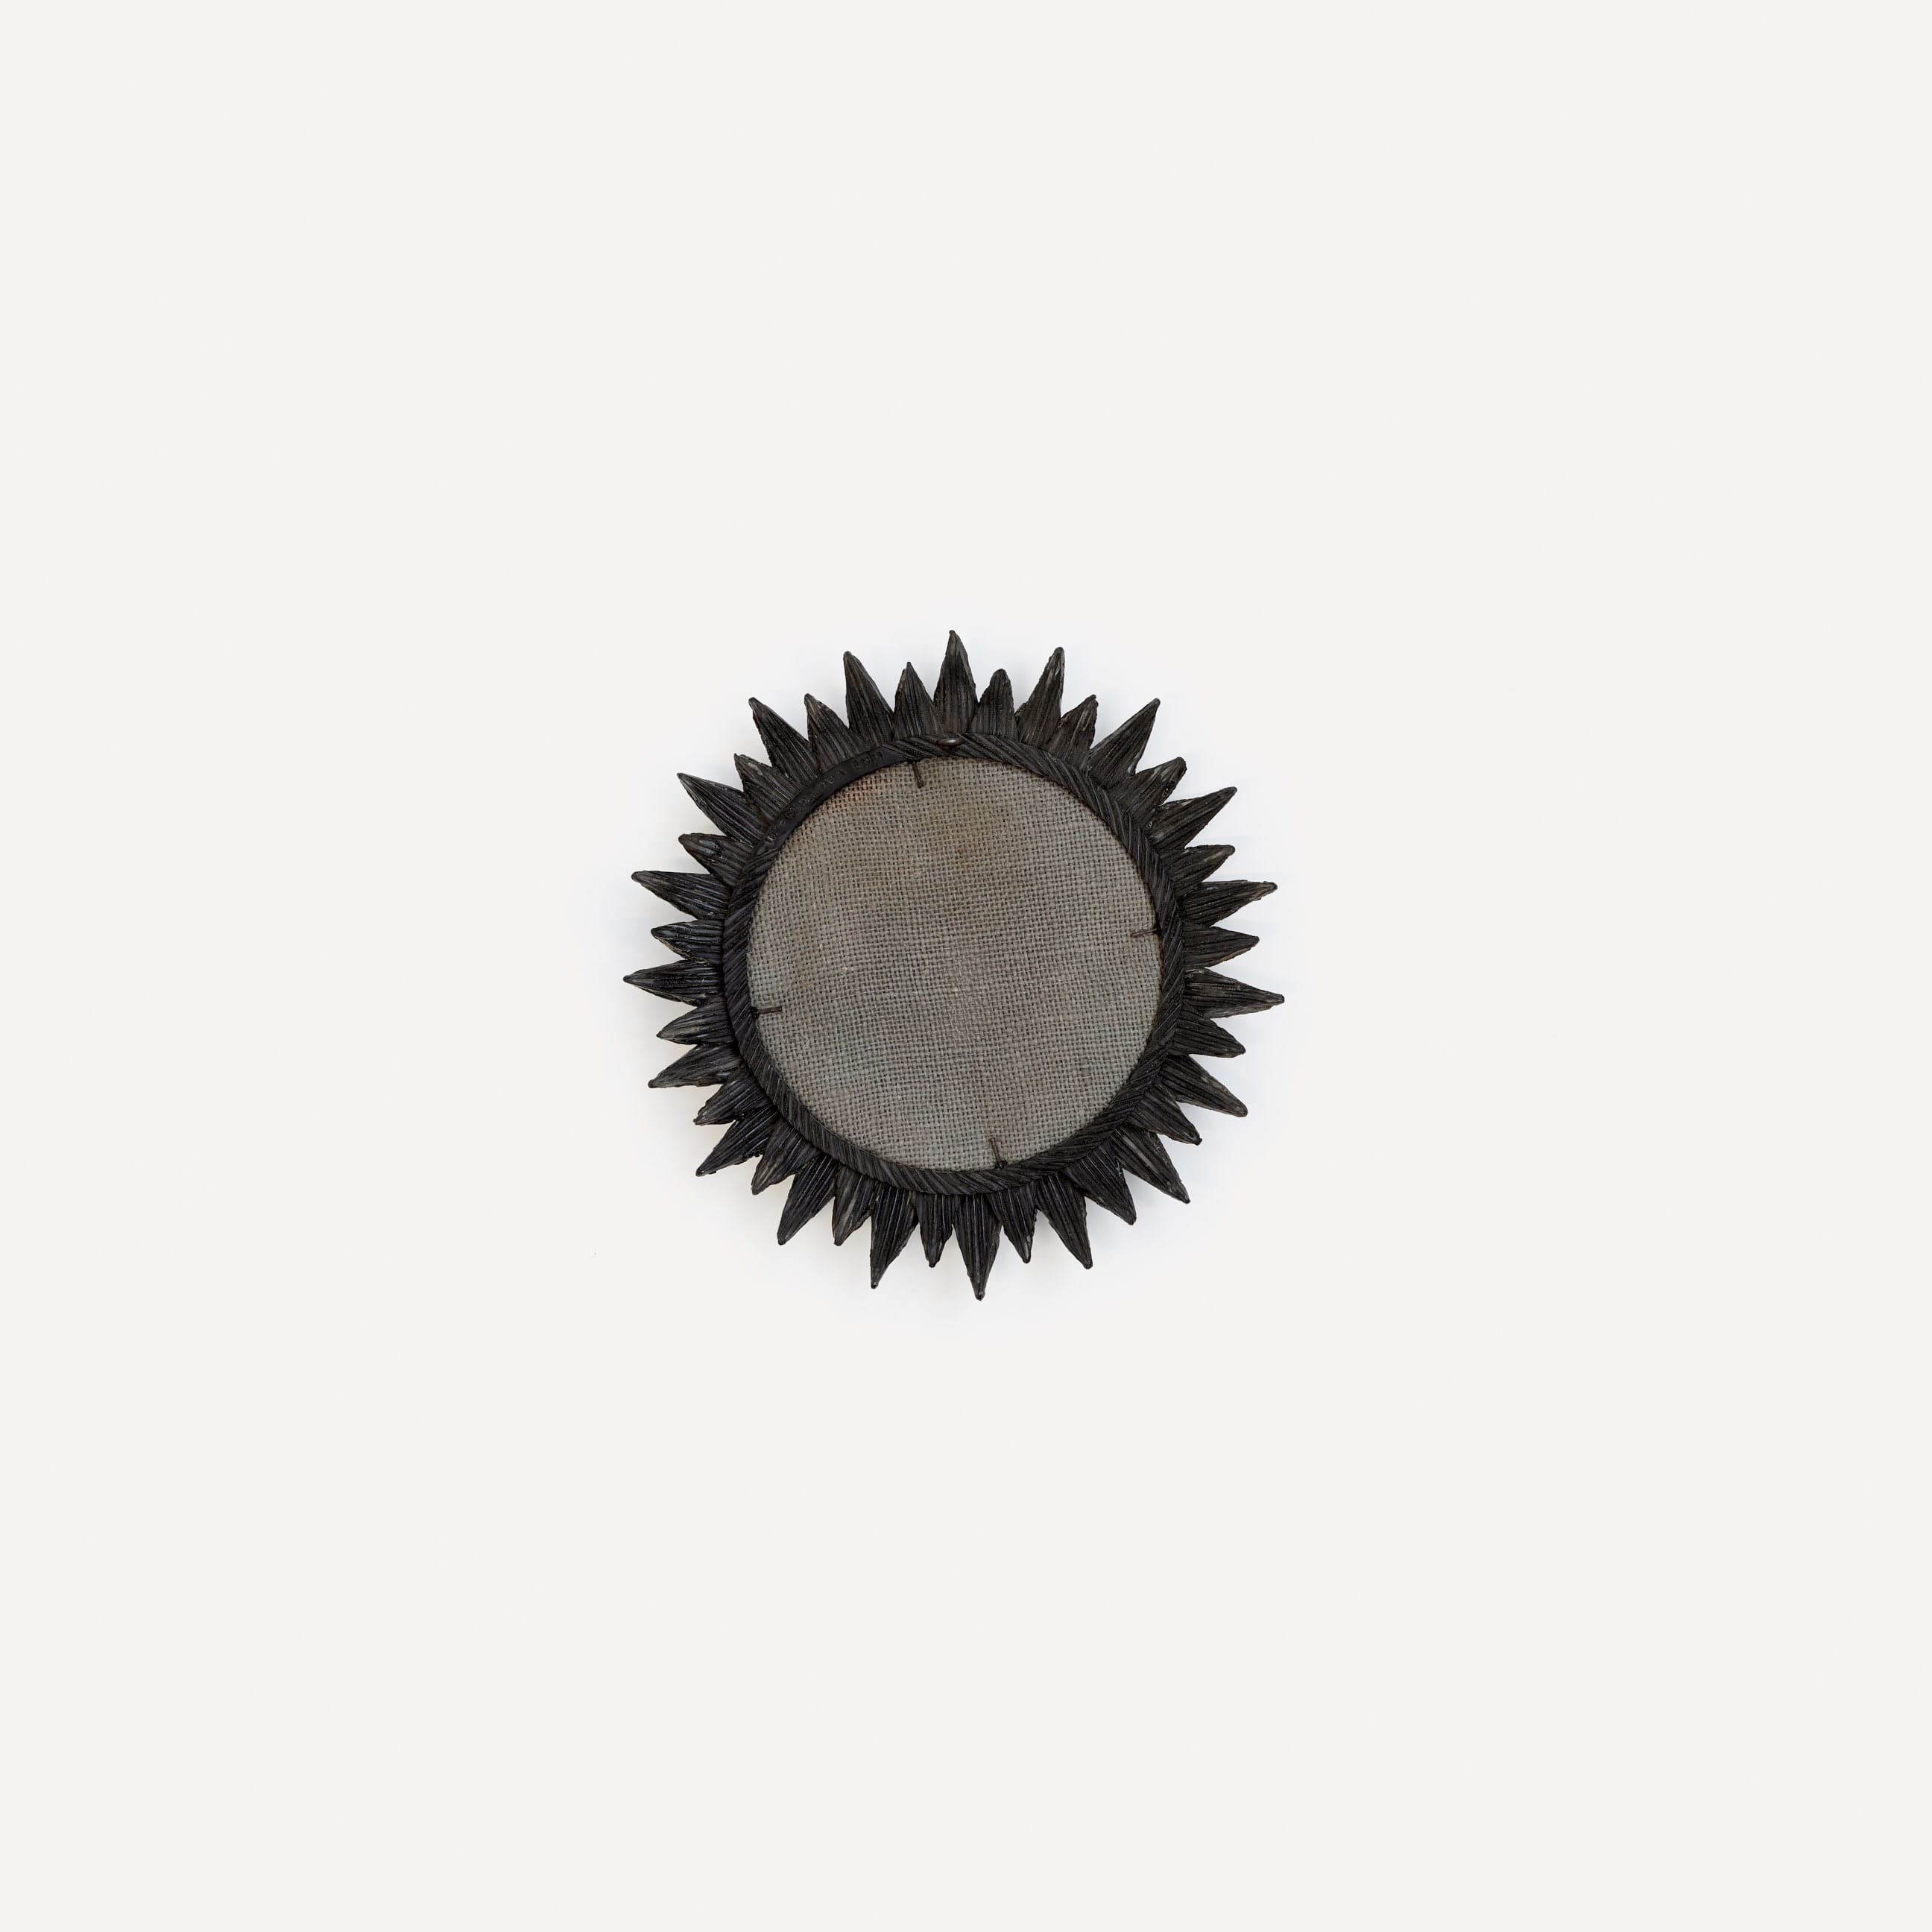 Line Vautrin, Black “Soleil à pointes n°2” mirror, vue 01